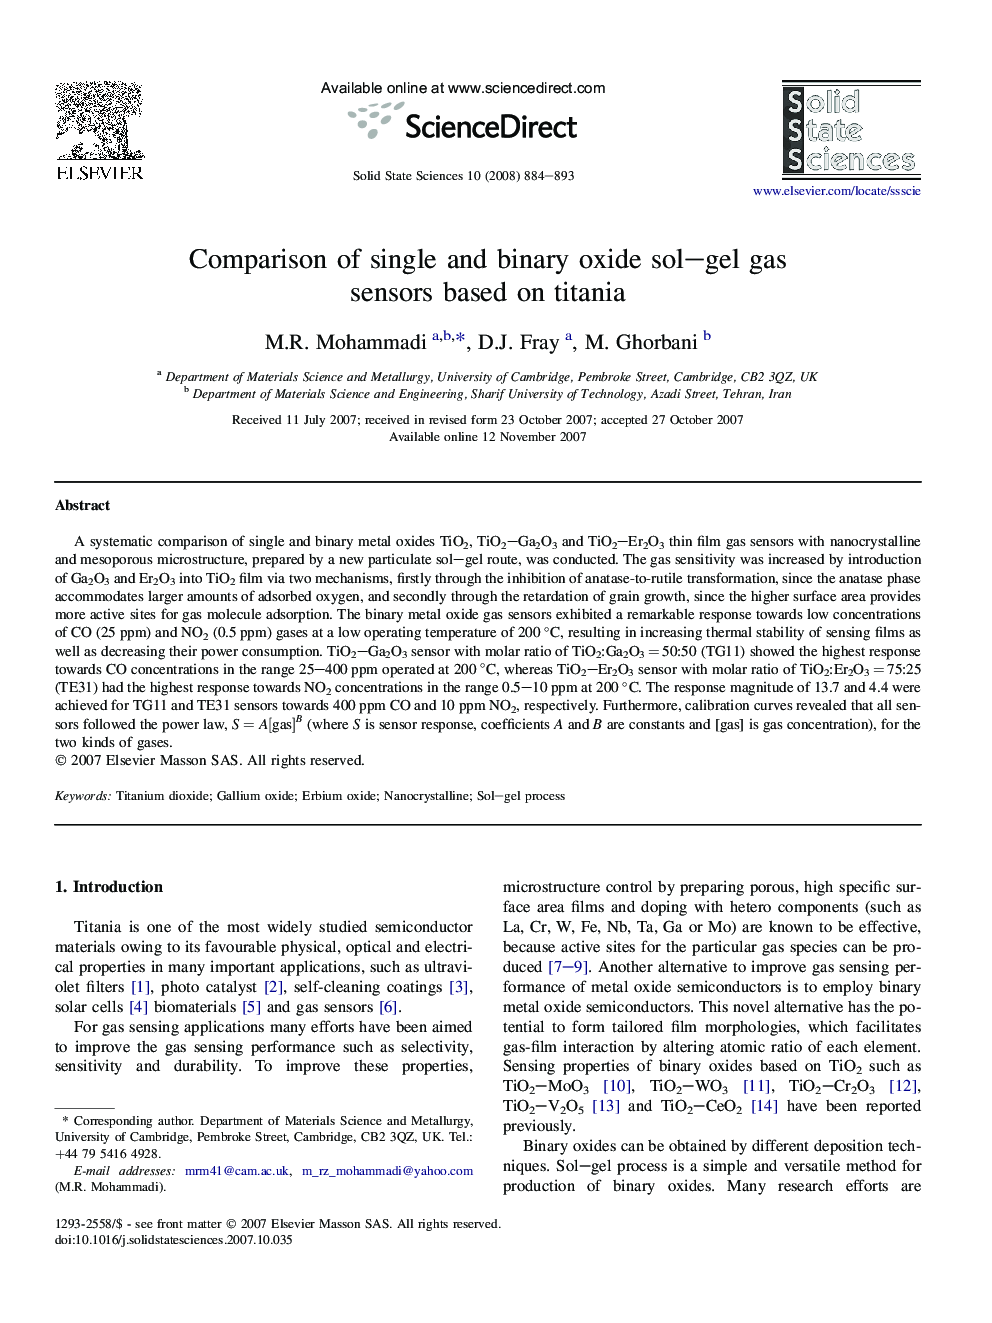 Comparison of single and binary oxide sol–gel gas sensors based on titania